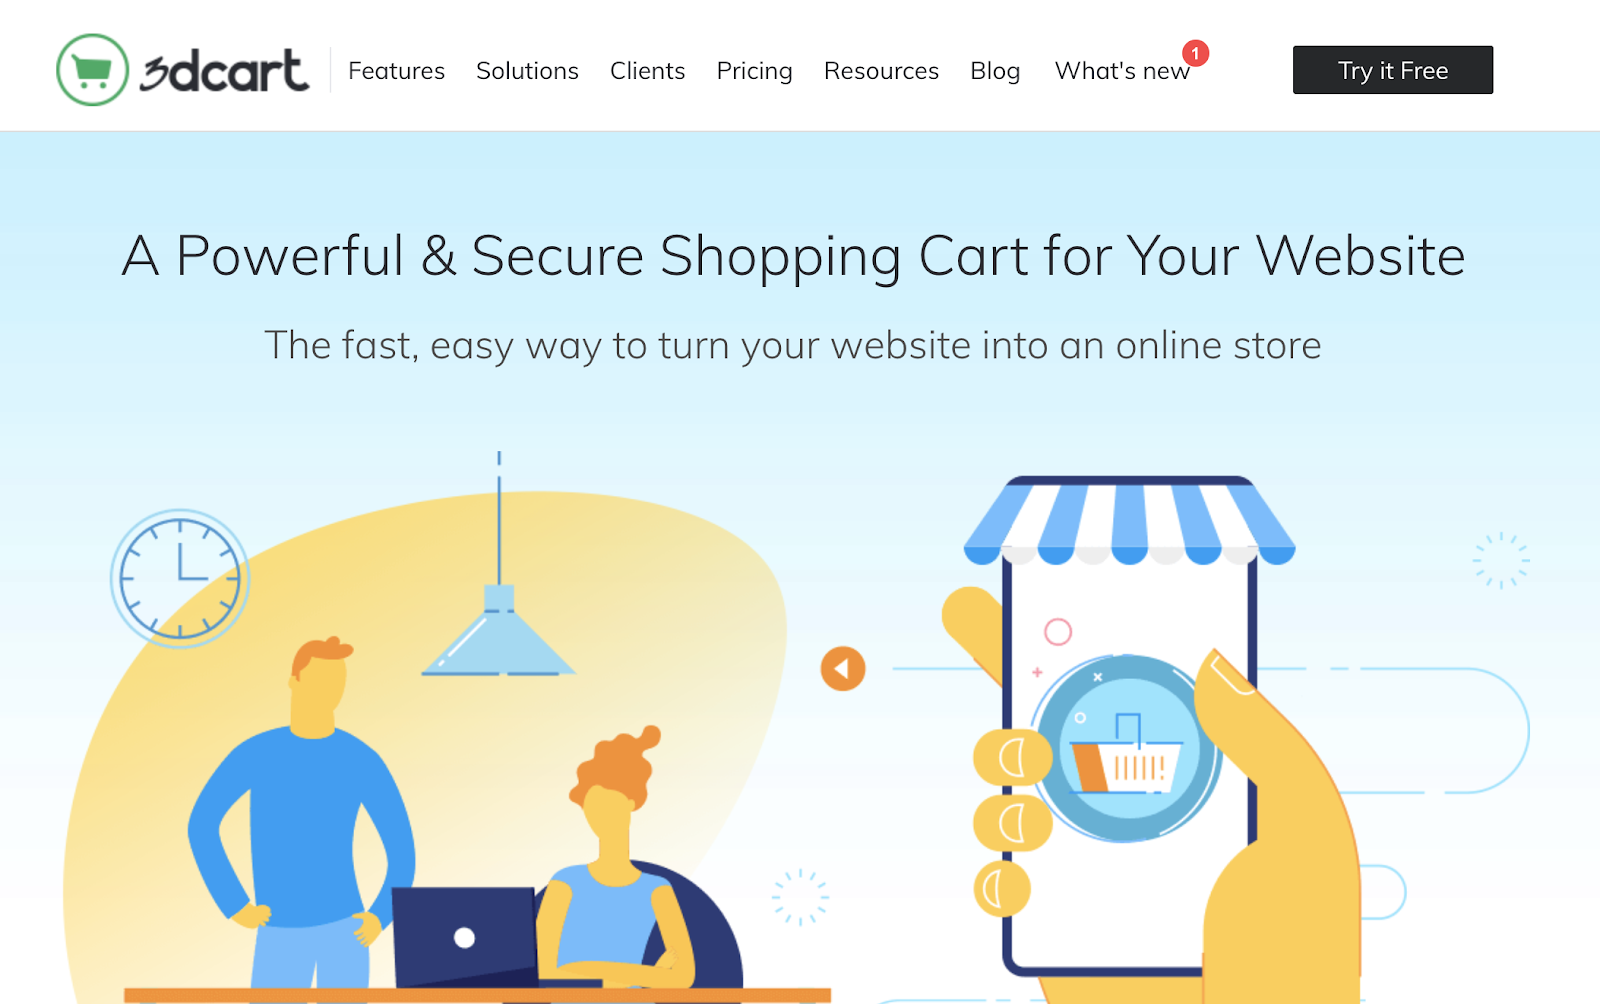 beste e-commerce tools 2020 3dcart